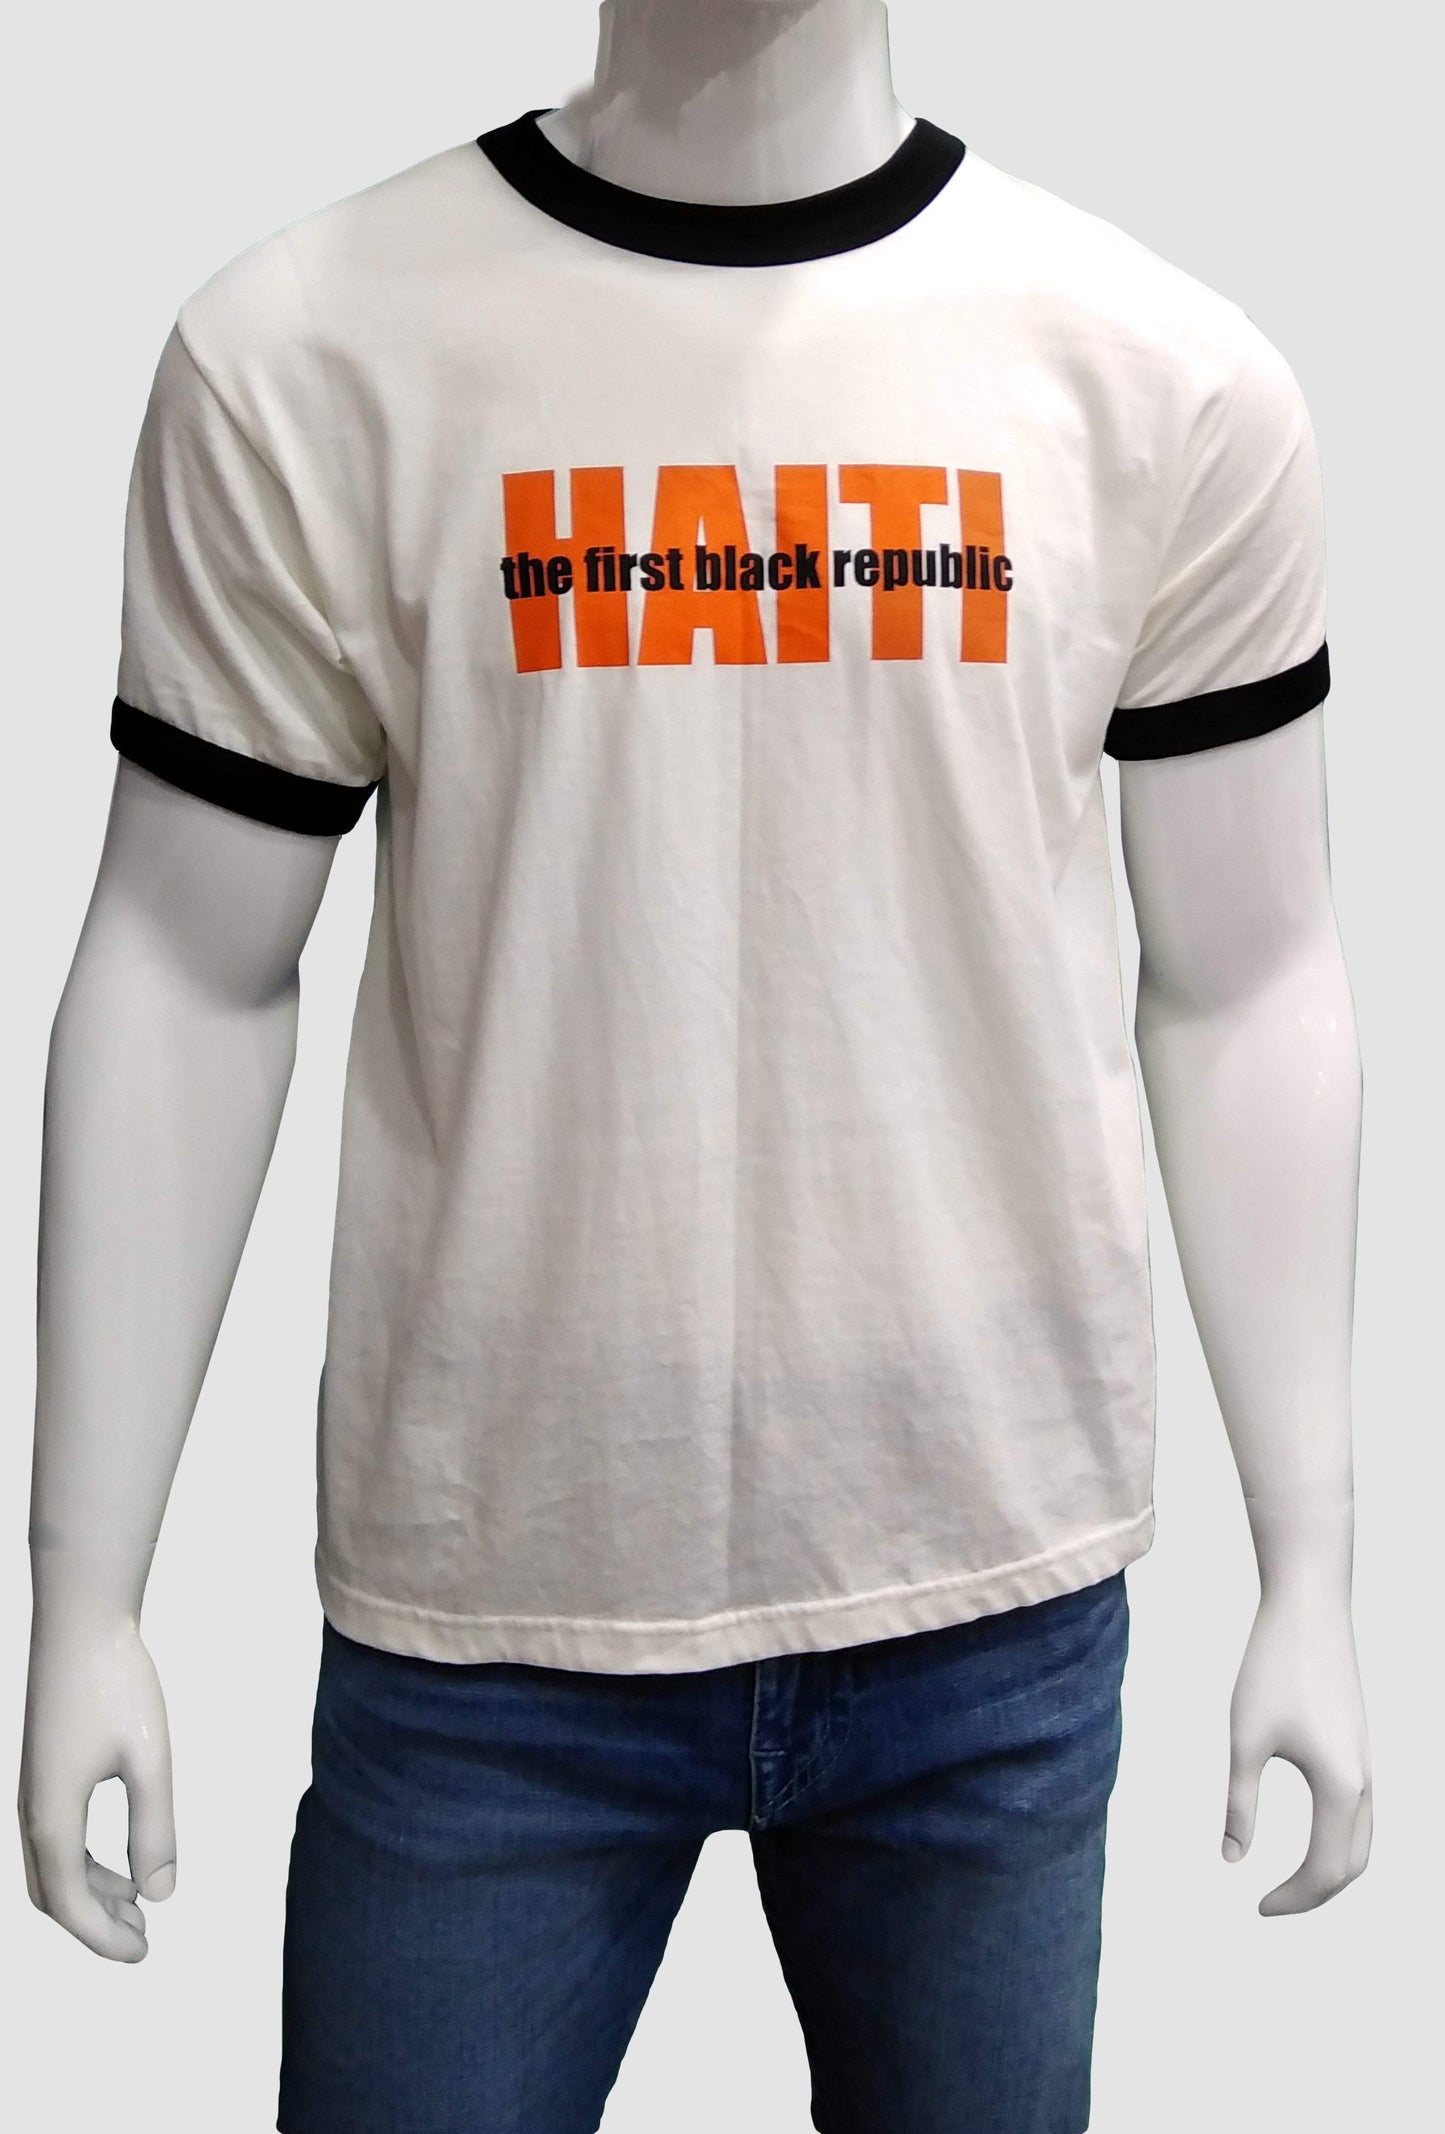 Macaya Mens Tops Medium / White The First Black Republic T-Shirt